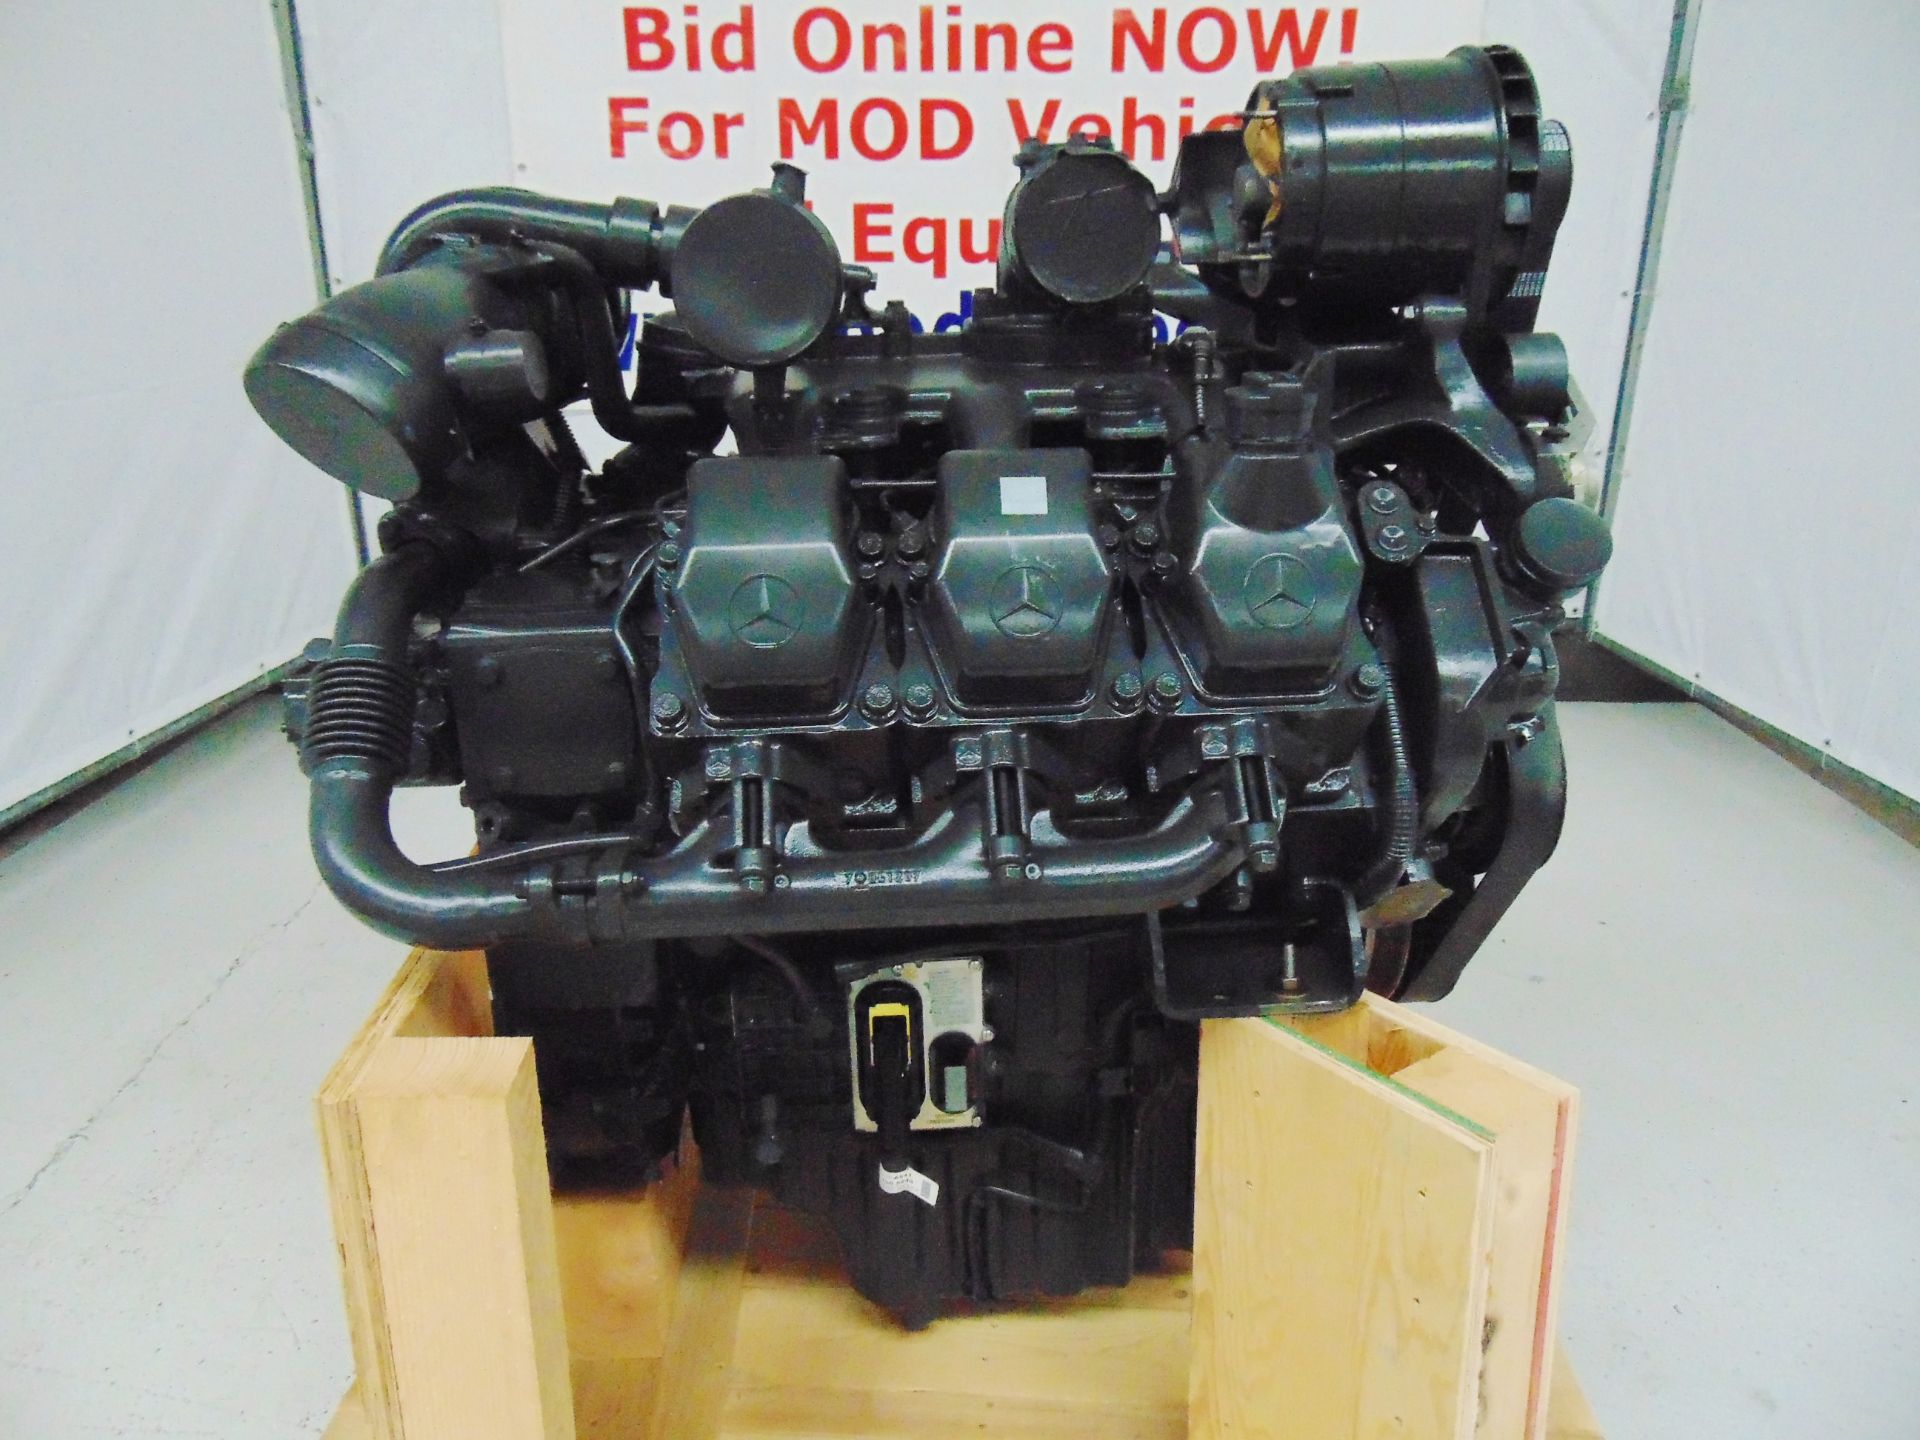 Factory Reconditioned Mercedes-Benz OM501LA V6 Turbo Diesel Engine - Image 9 of 20